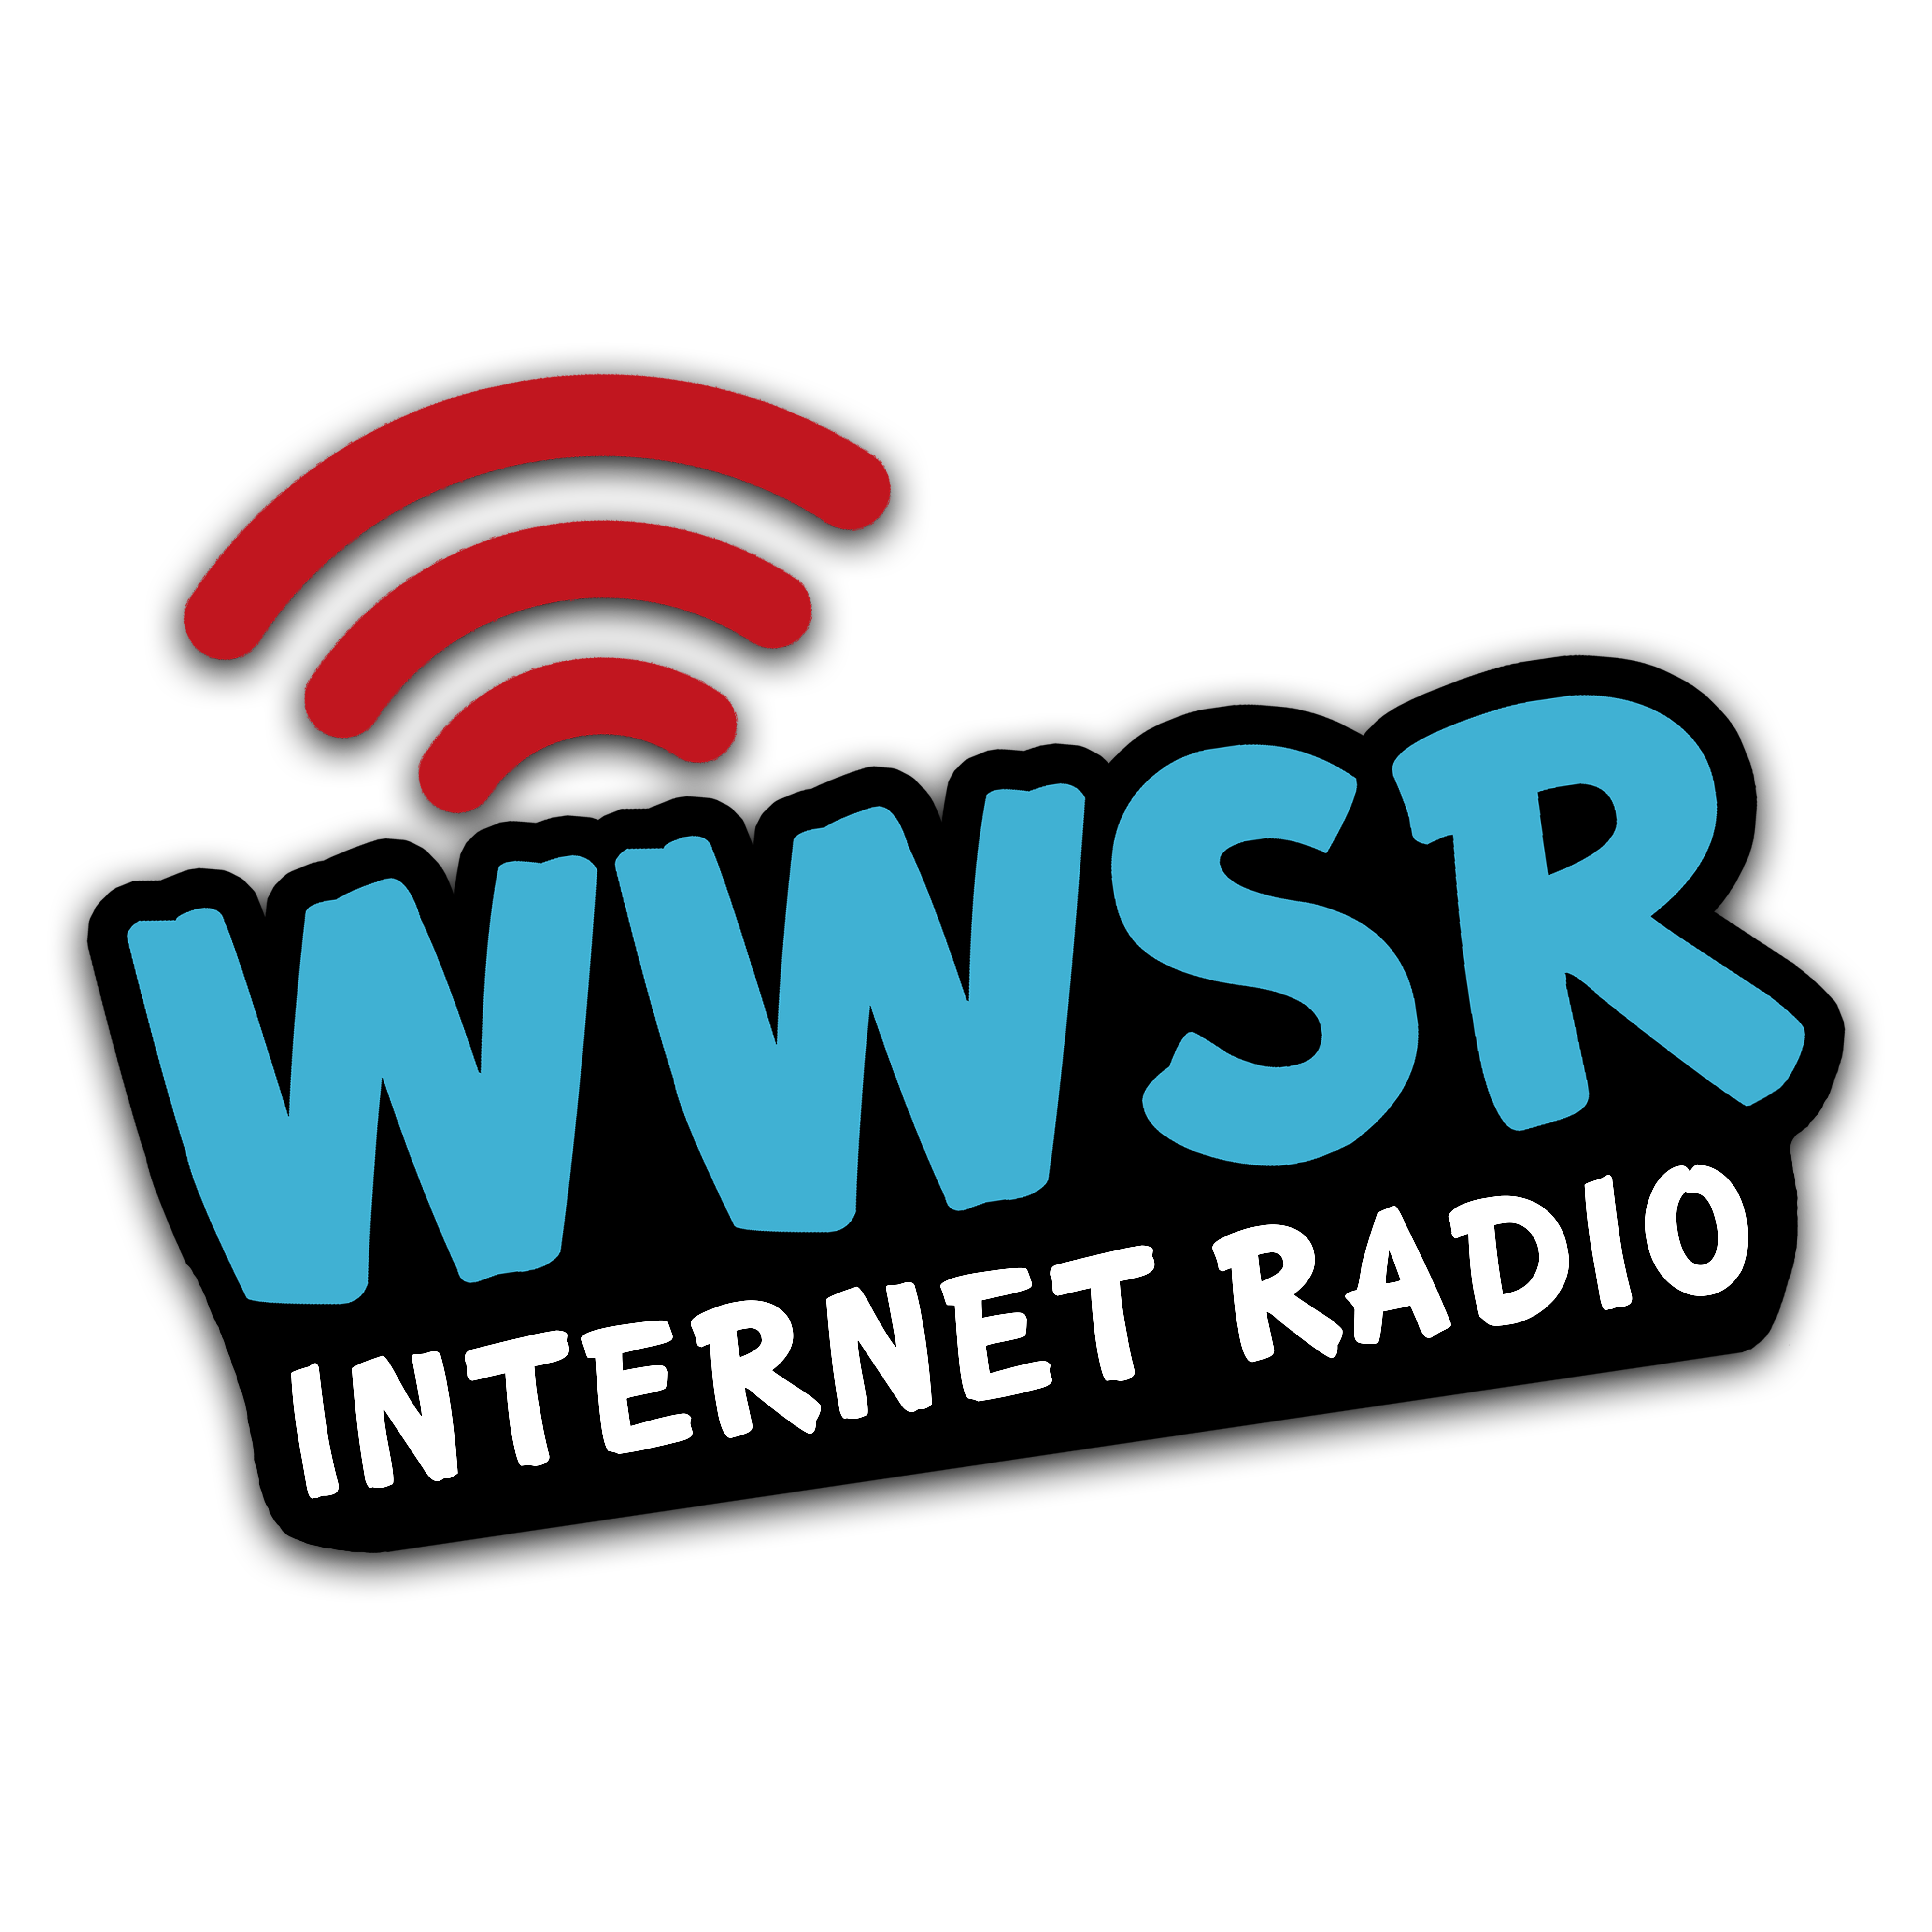 WWSR Radio Logo and Link